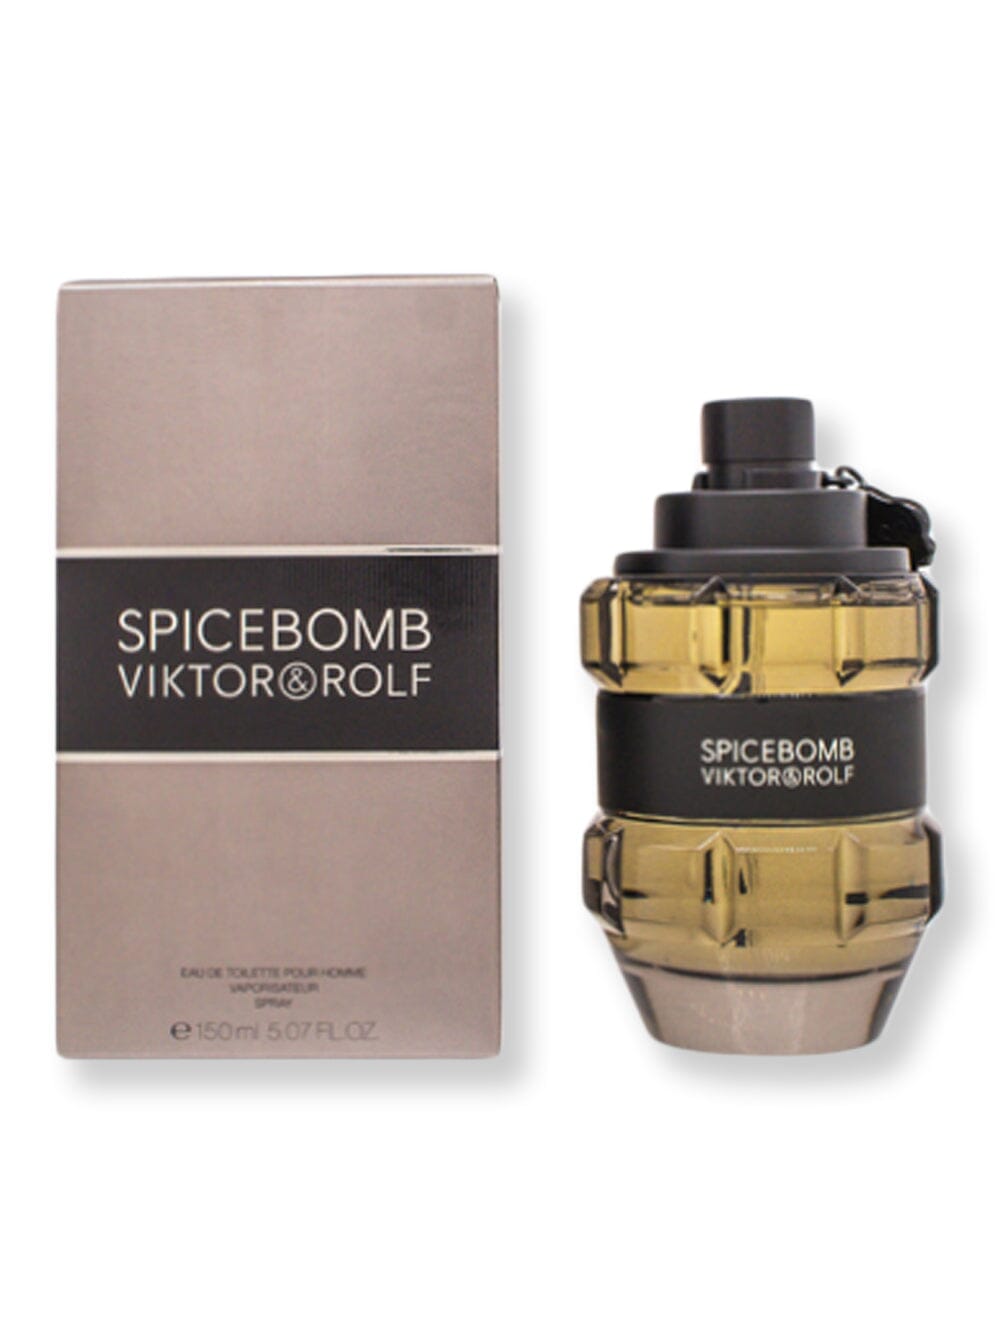 Viktor&Rolf Viktor&Rolf Spicebomb EDT Spray 5 oz150 ml Perfume 